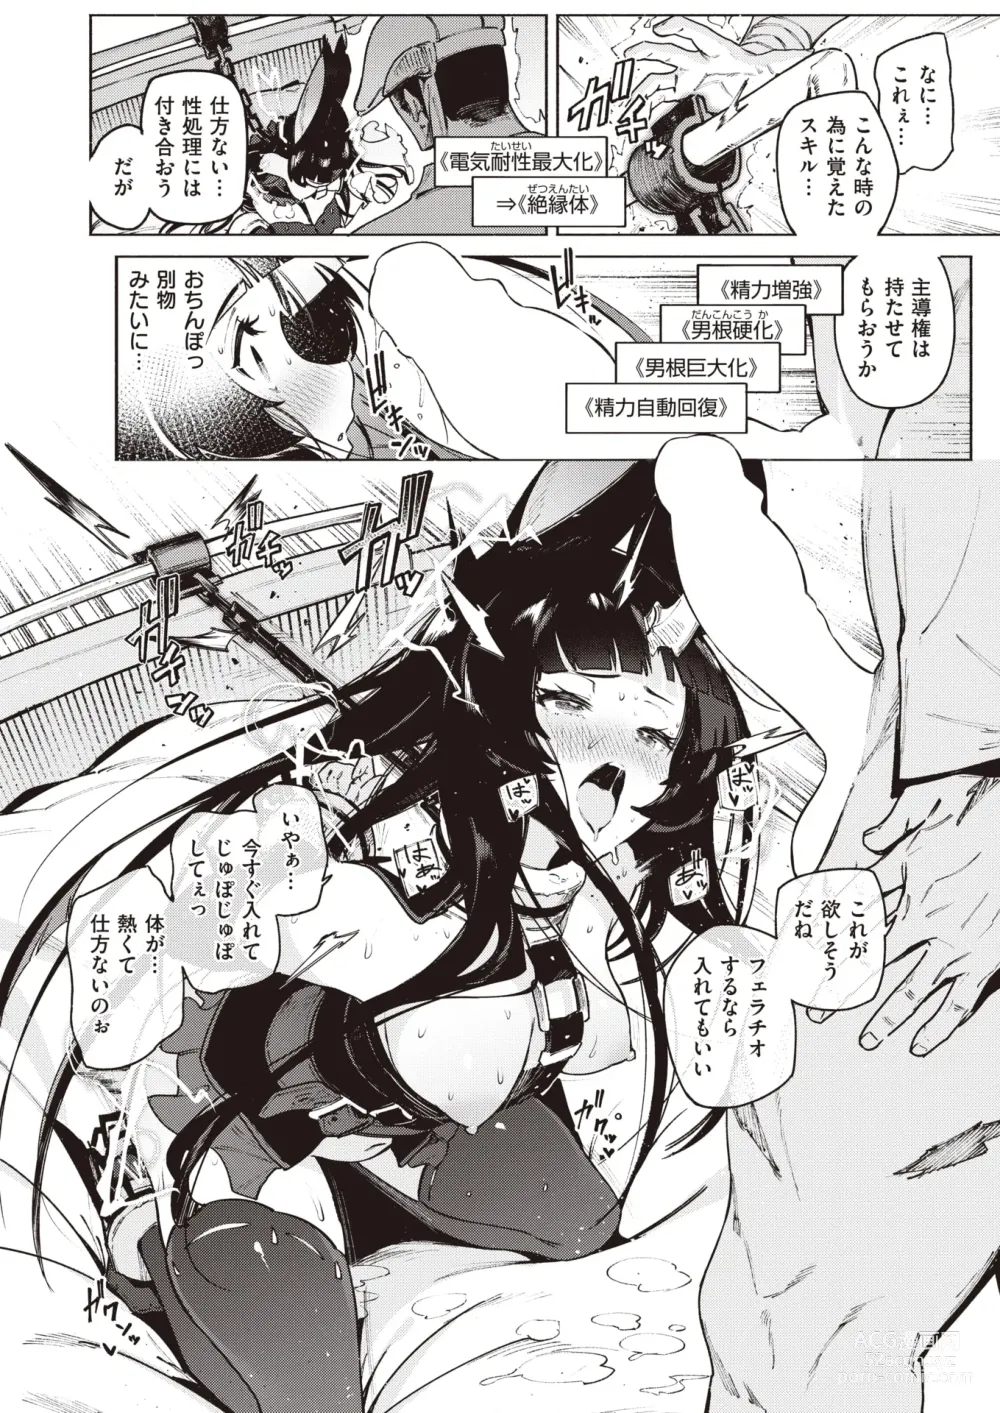 Page 5 of manga Isekai Rakuten Vol. 30